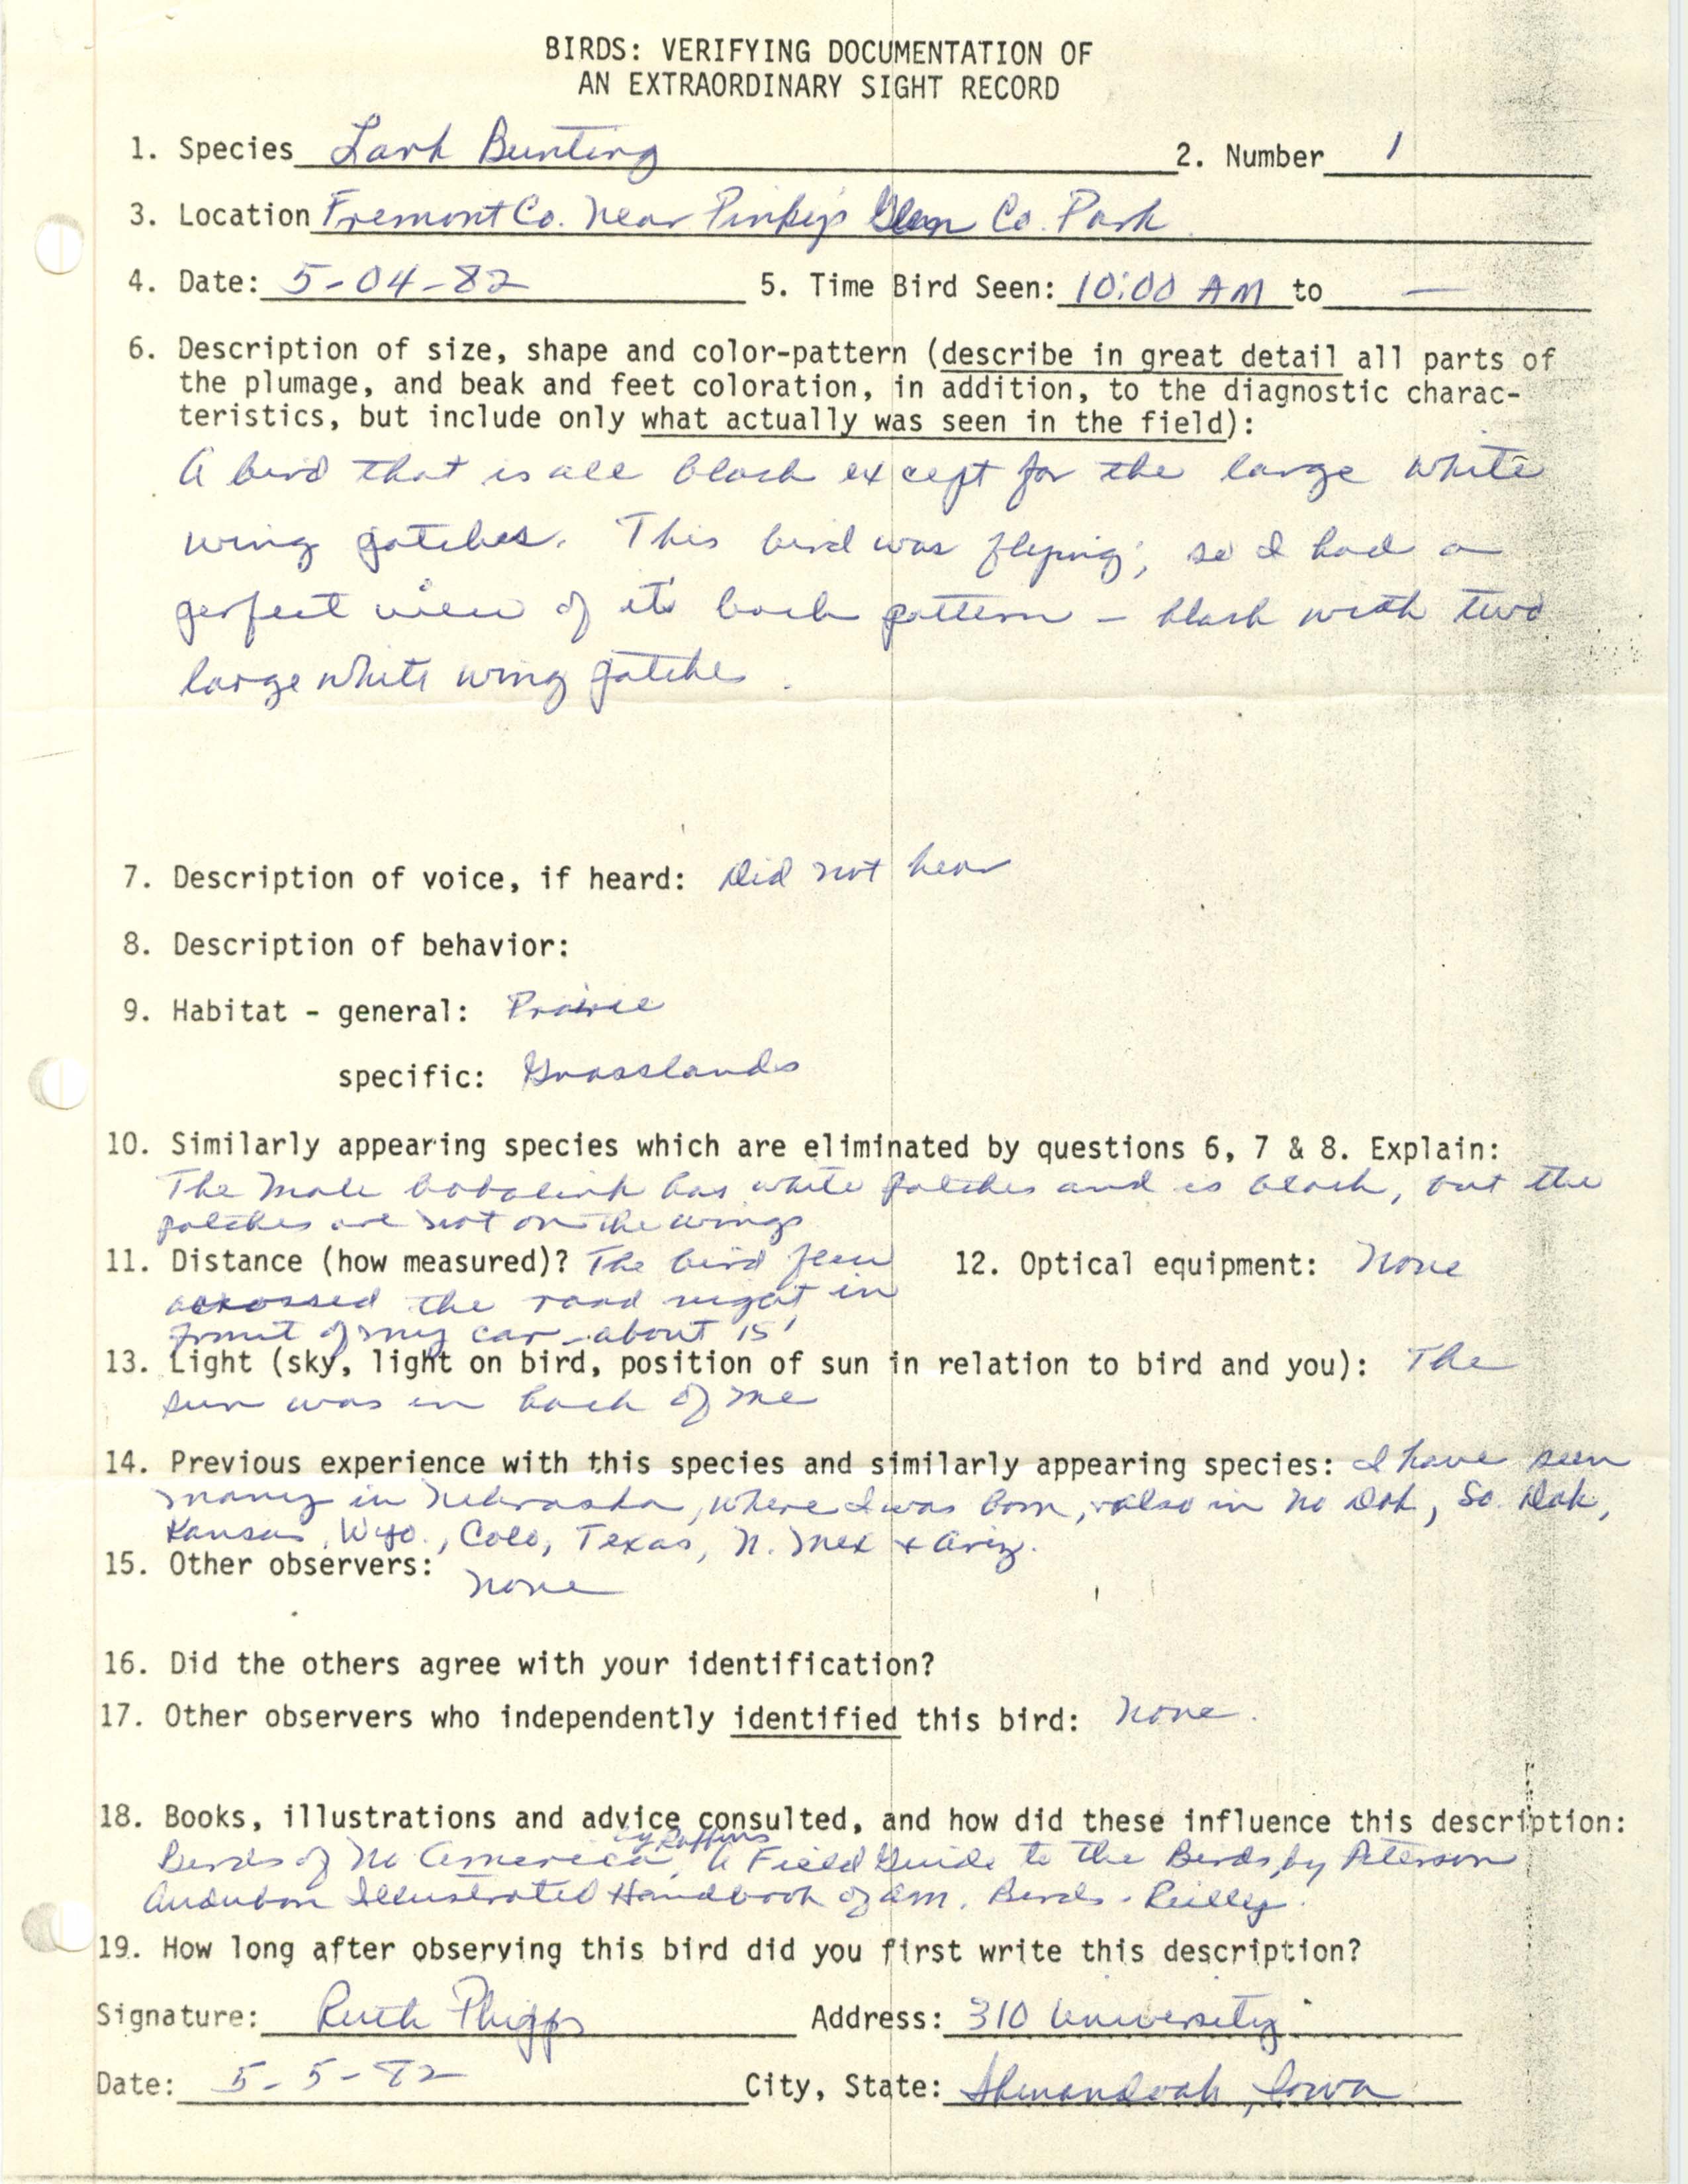 Rare bird documentation form for Lark Bunting near Pinky's Glen, 1982